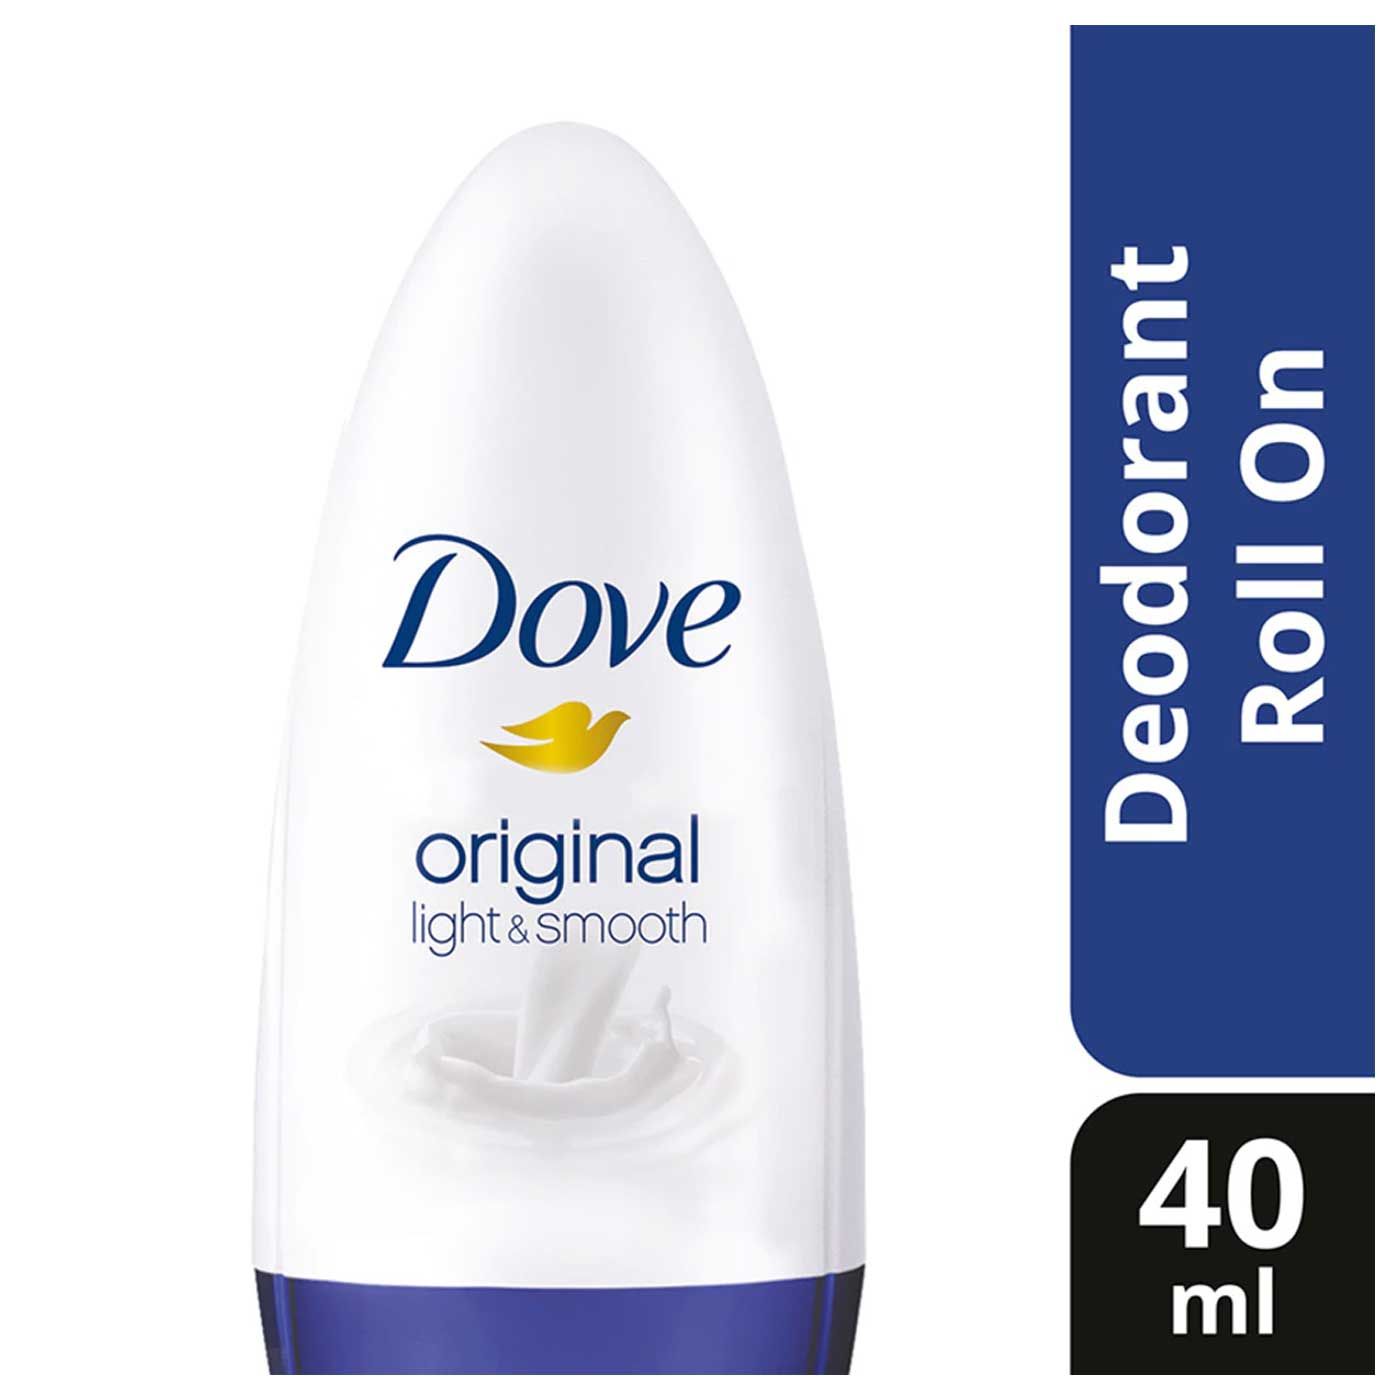 Dove Roll On Deodorant Light & Smooth 40ml - 1